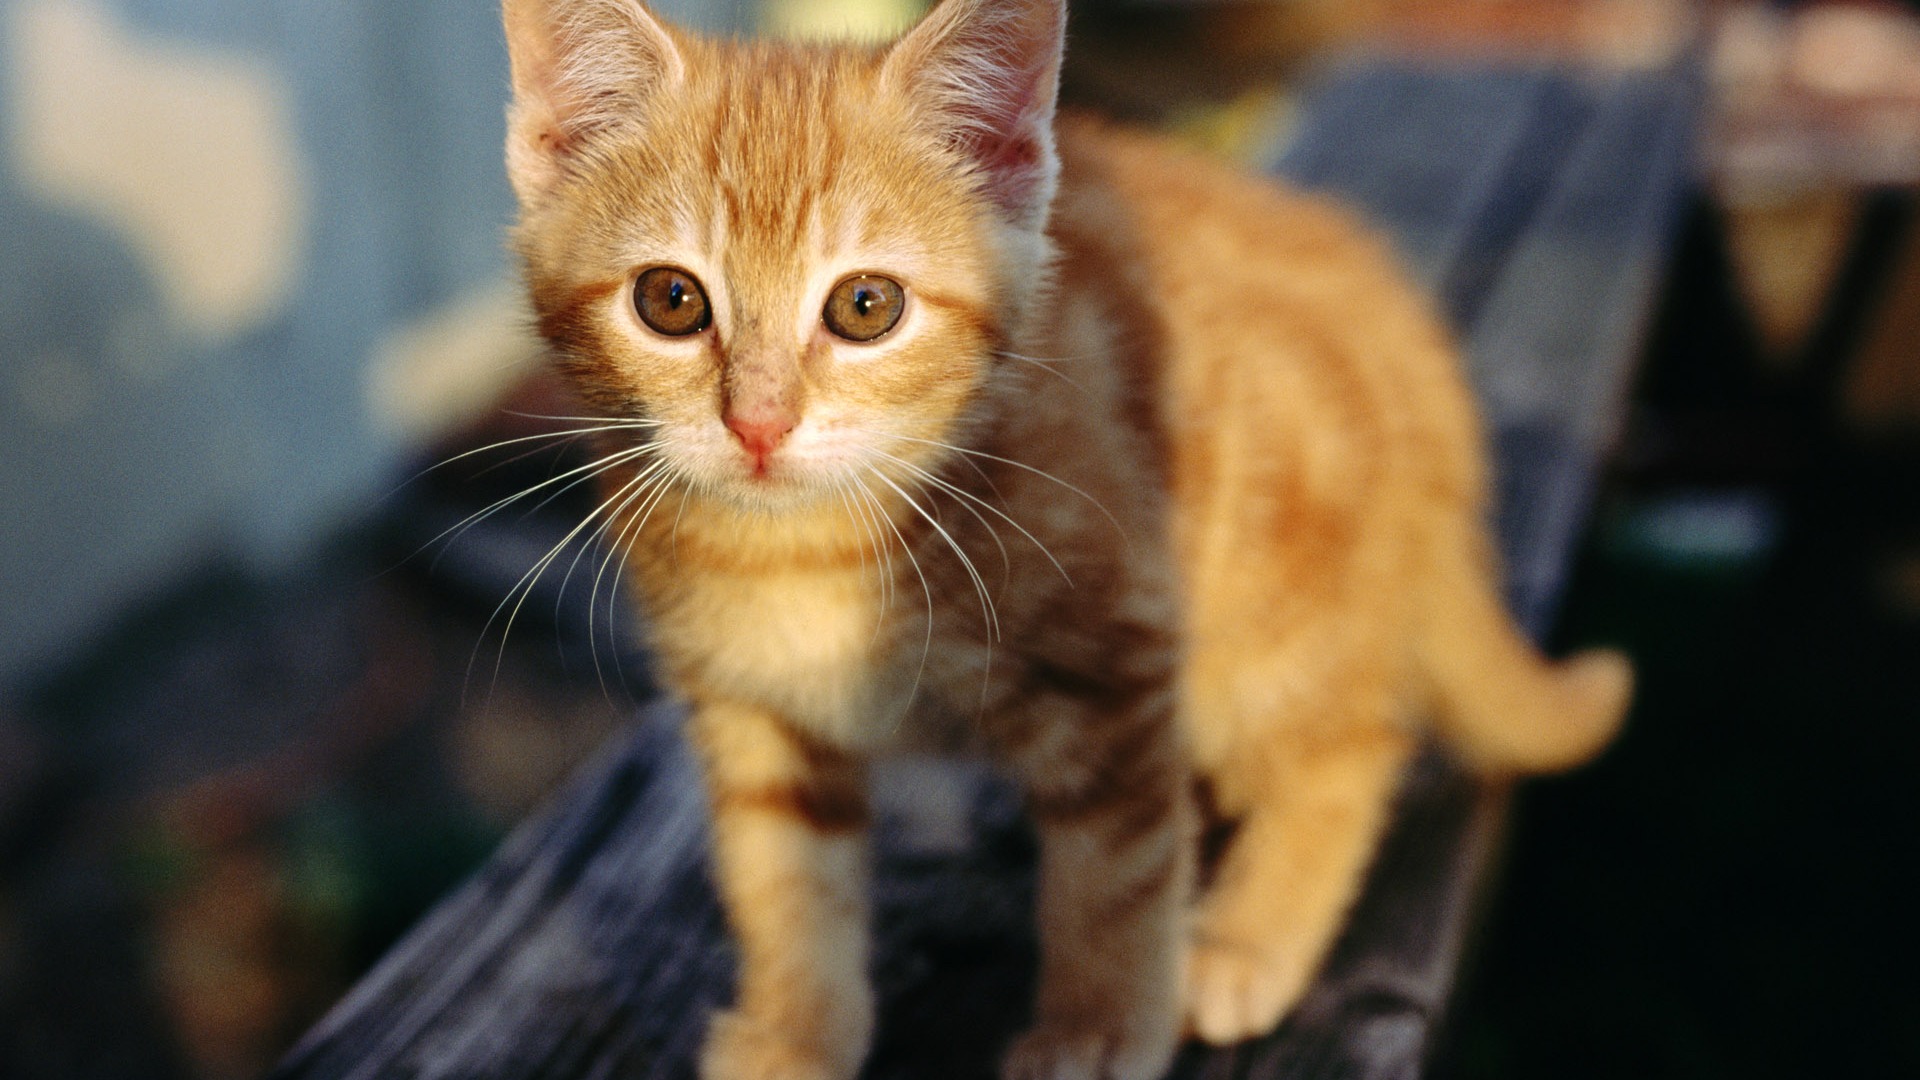 HD wallpaper cute cat photo #6 - 1920x1080